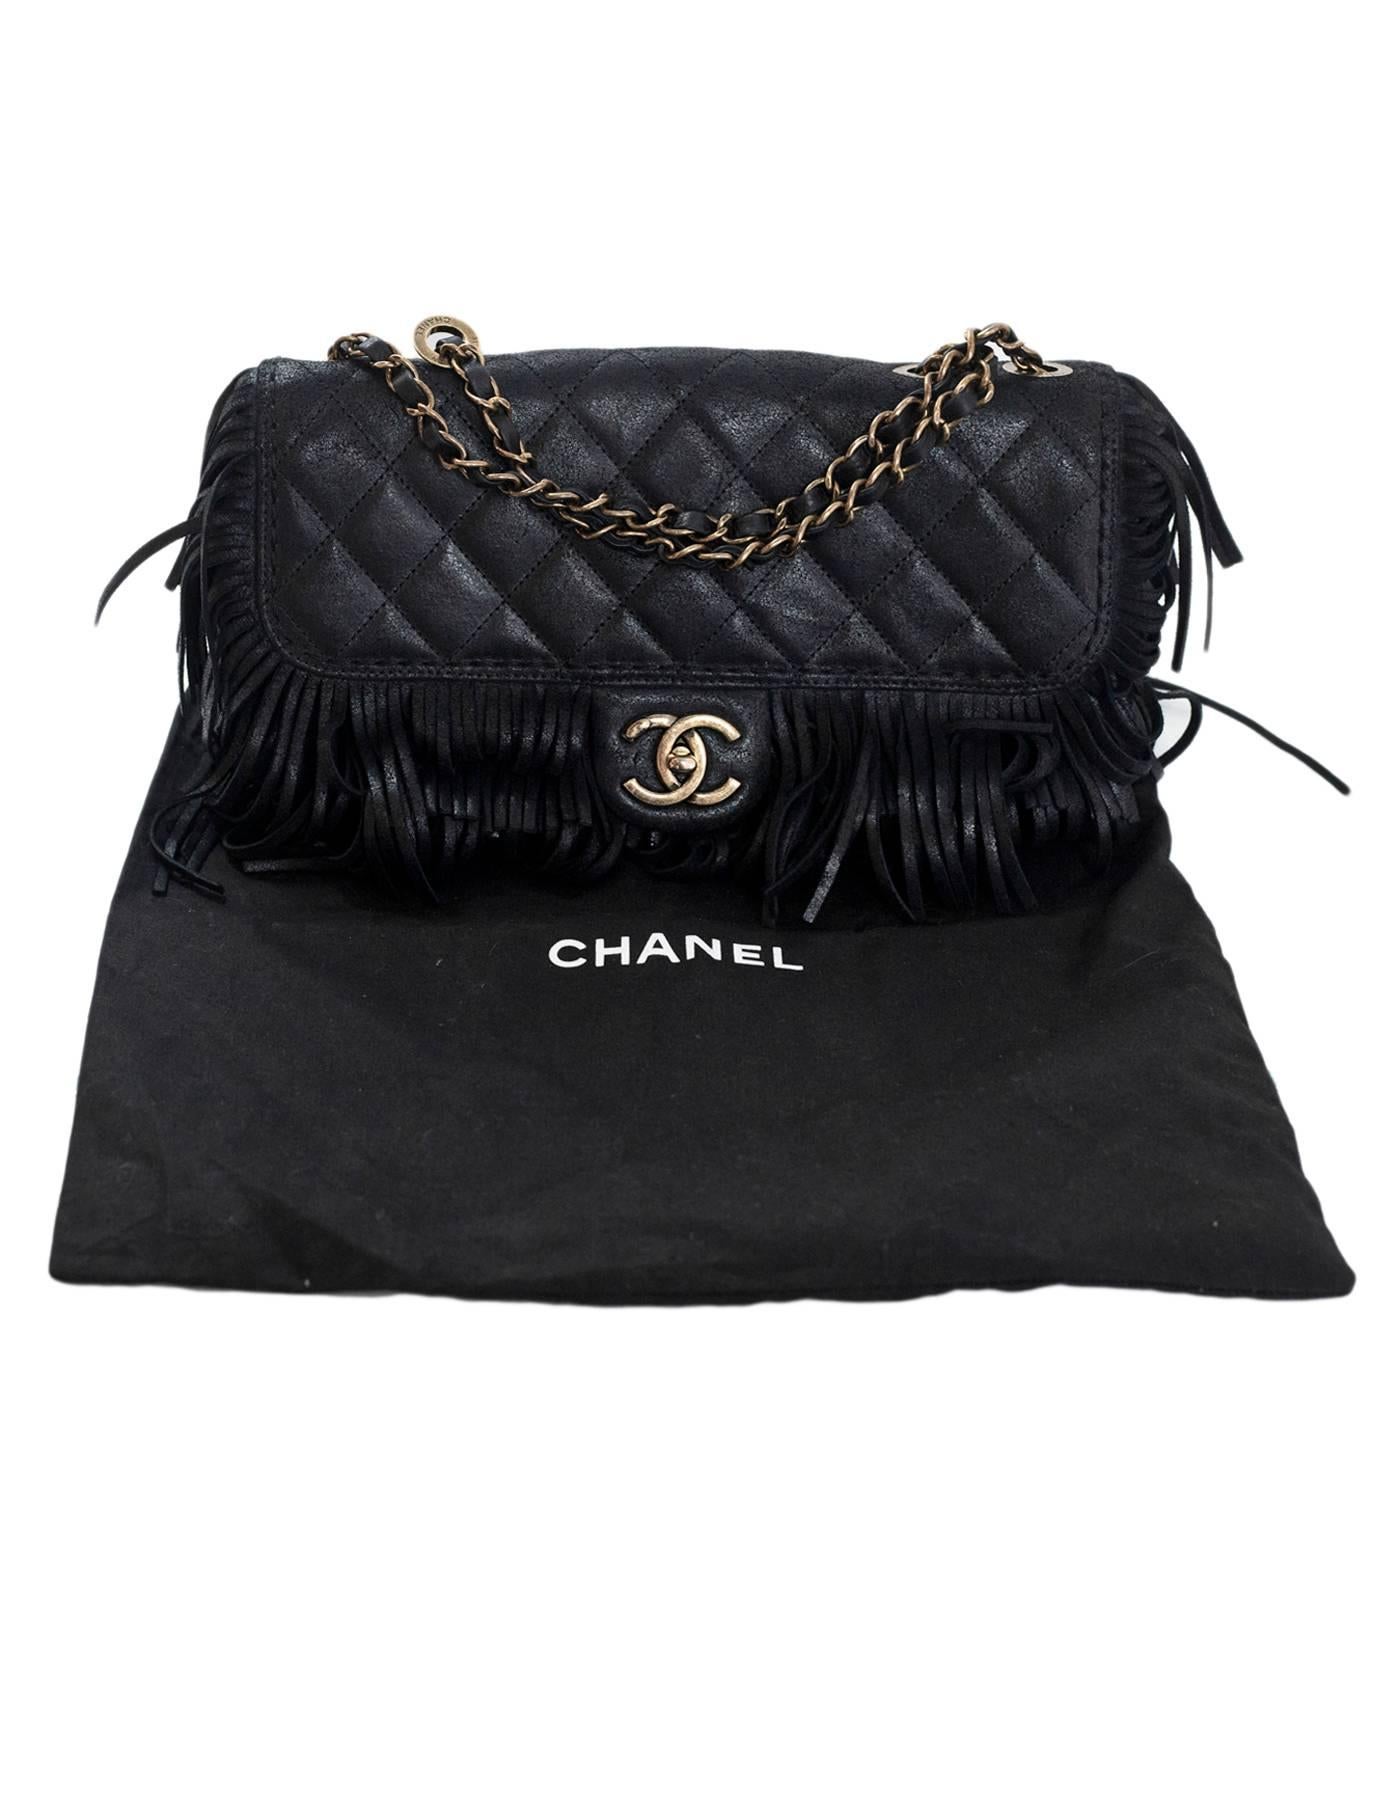 Chanel Black Quilted Nubuck Calfskin Paris/Dallas Fringe Flap Bag RT. $4, 700 4